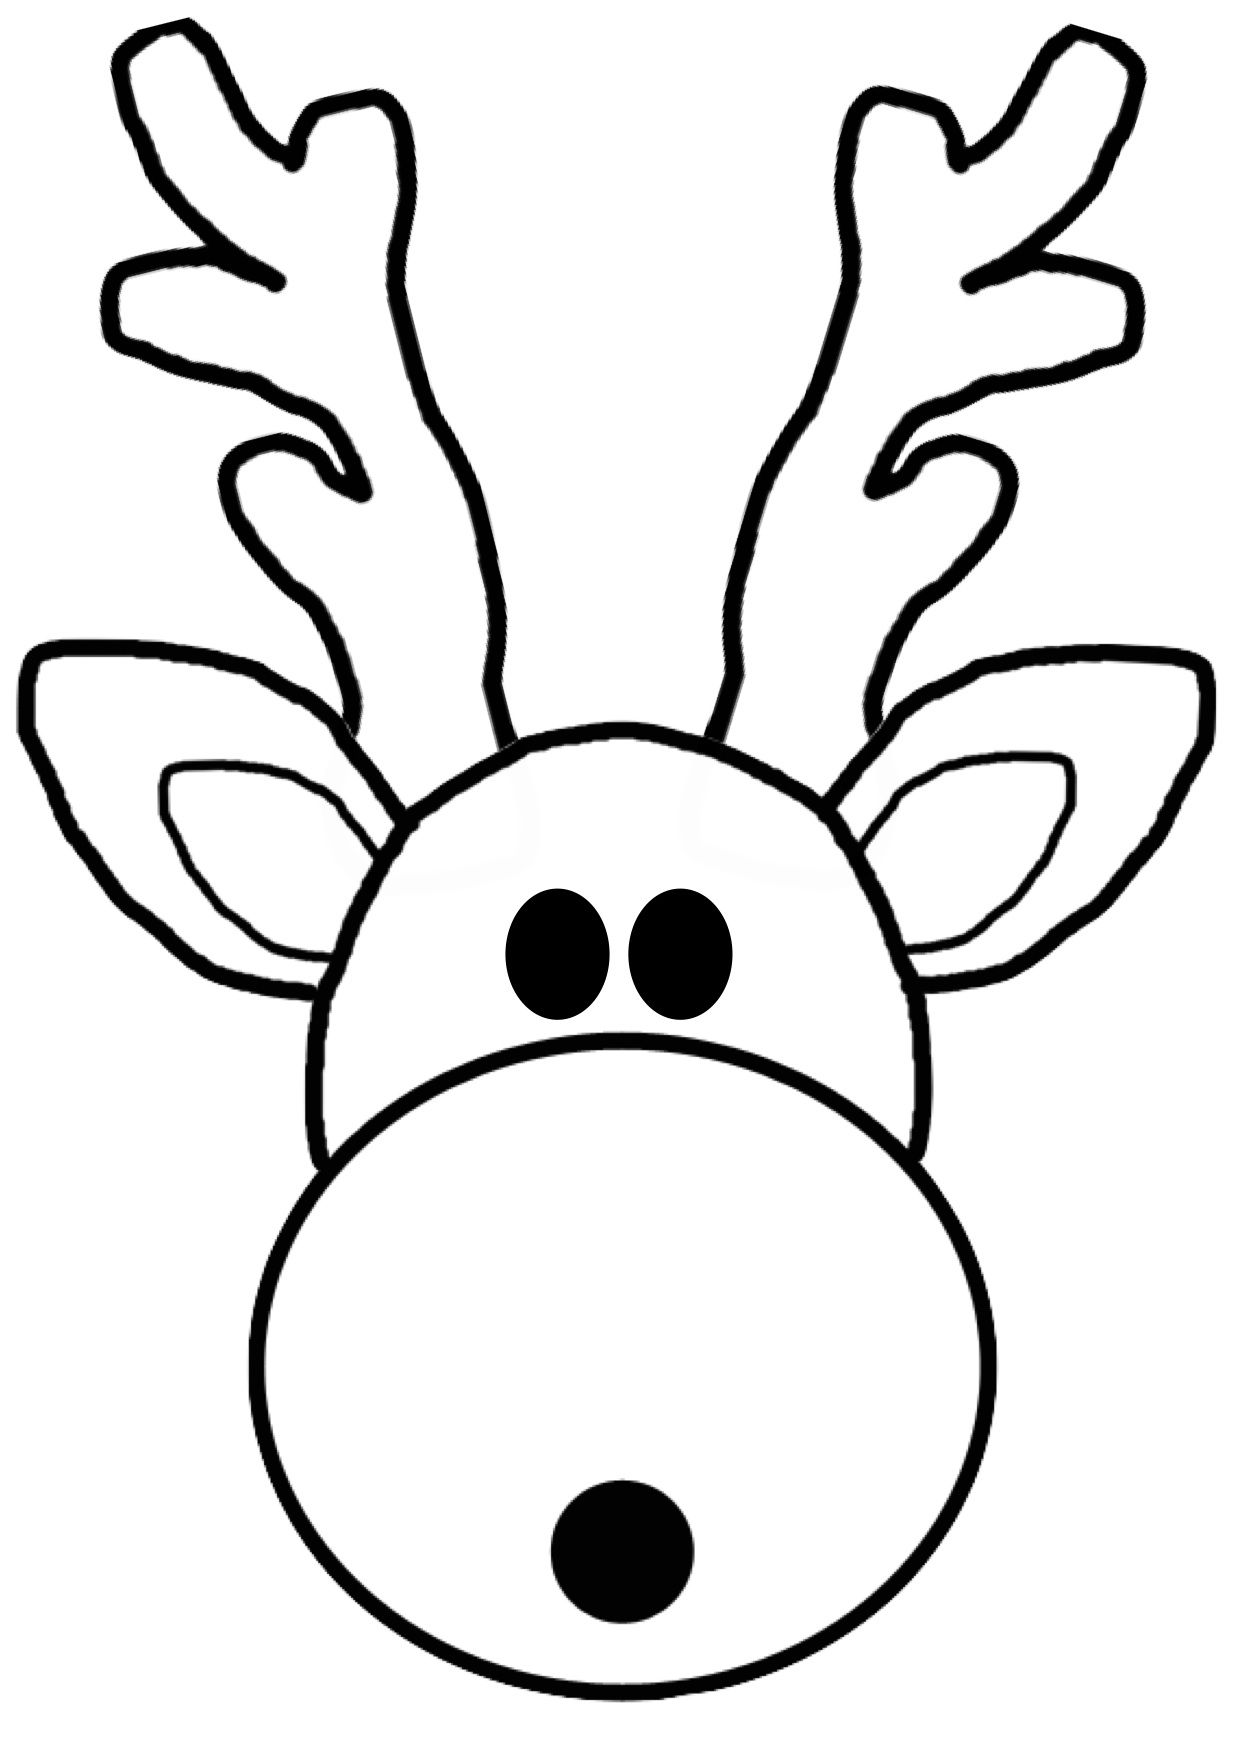 Free printable reindeer face template